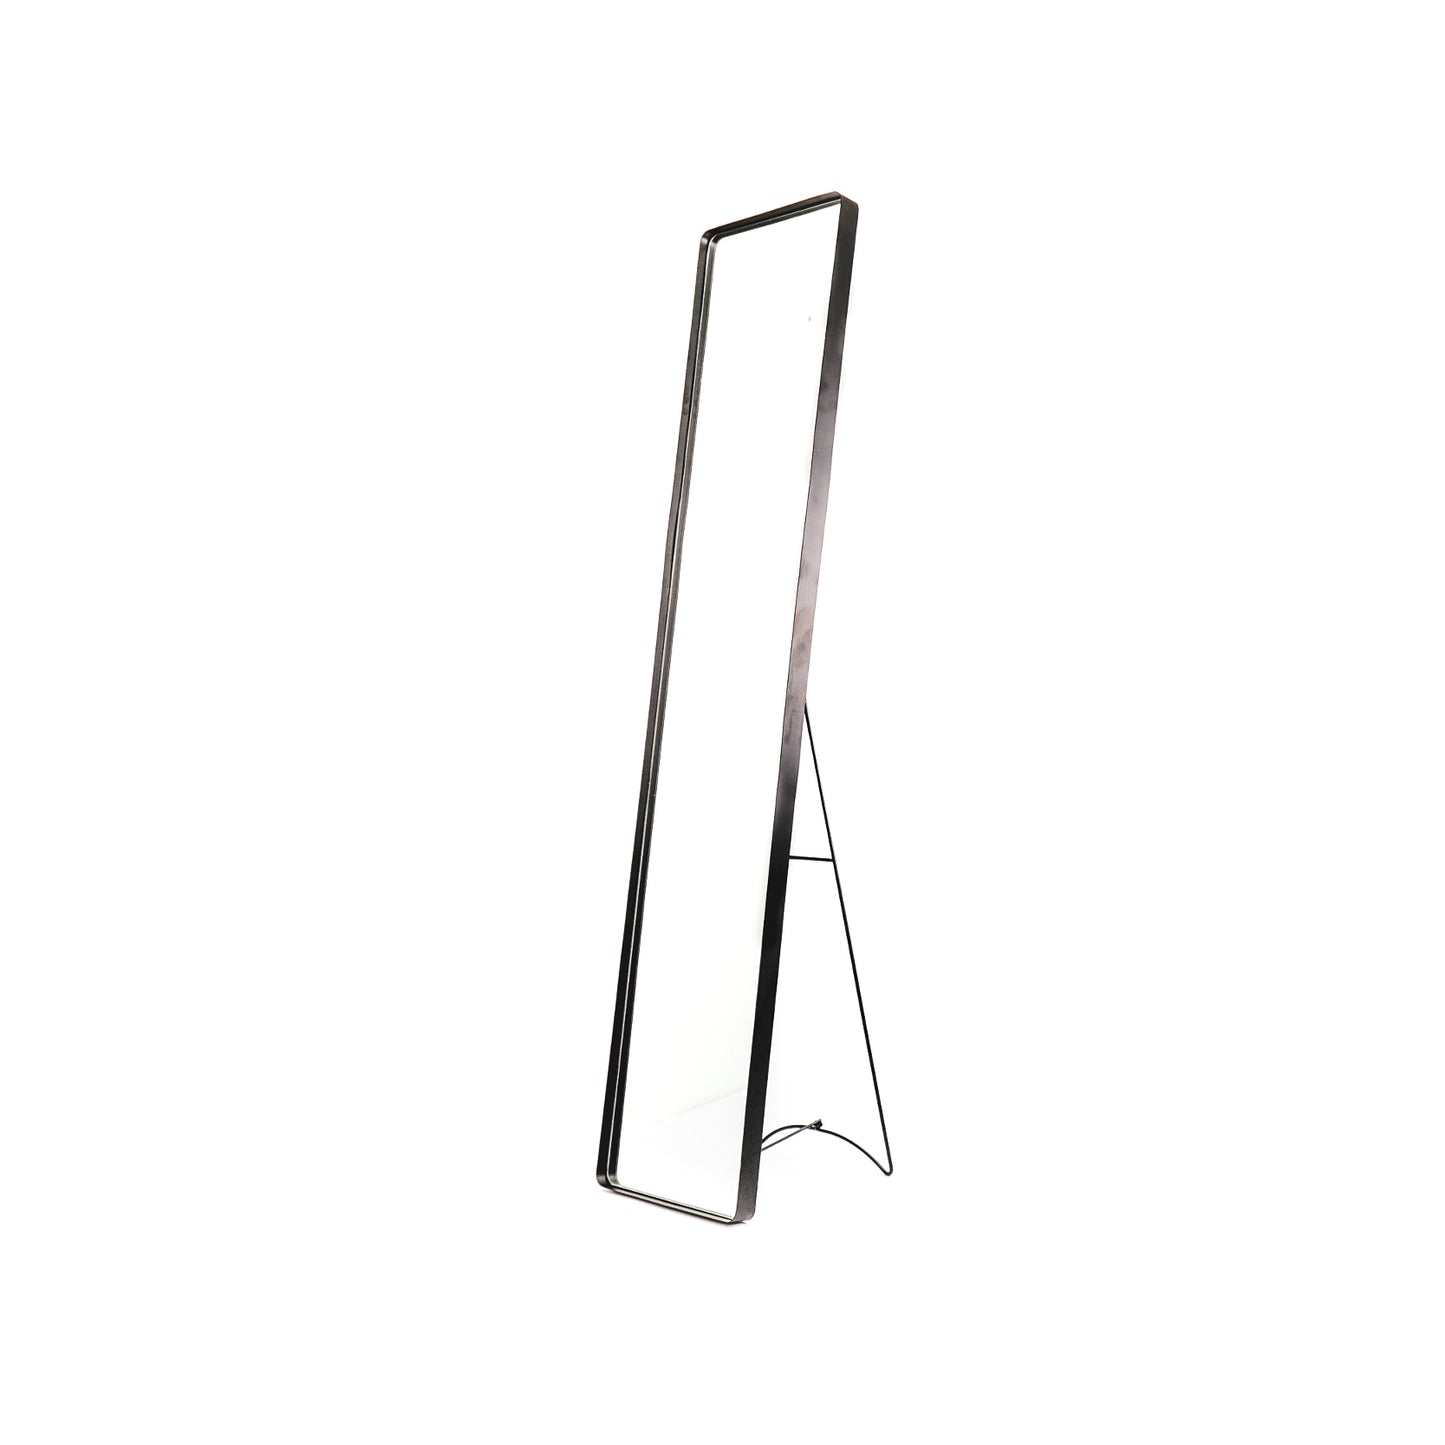 HV Fashion Mirror - Black - 30x4x150cm